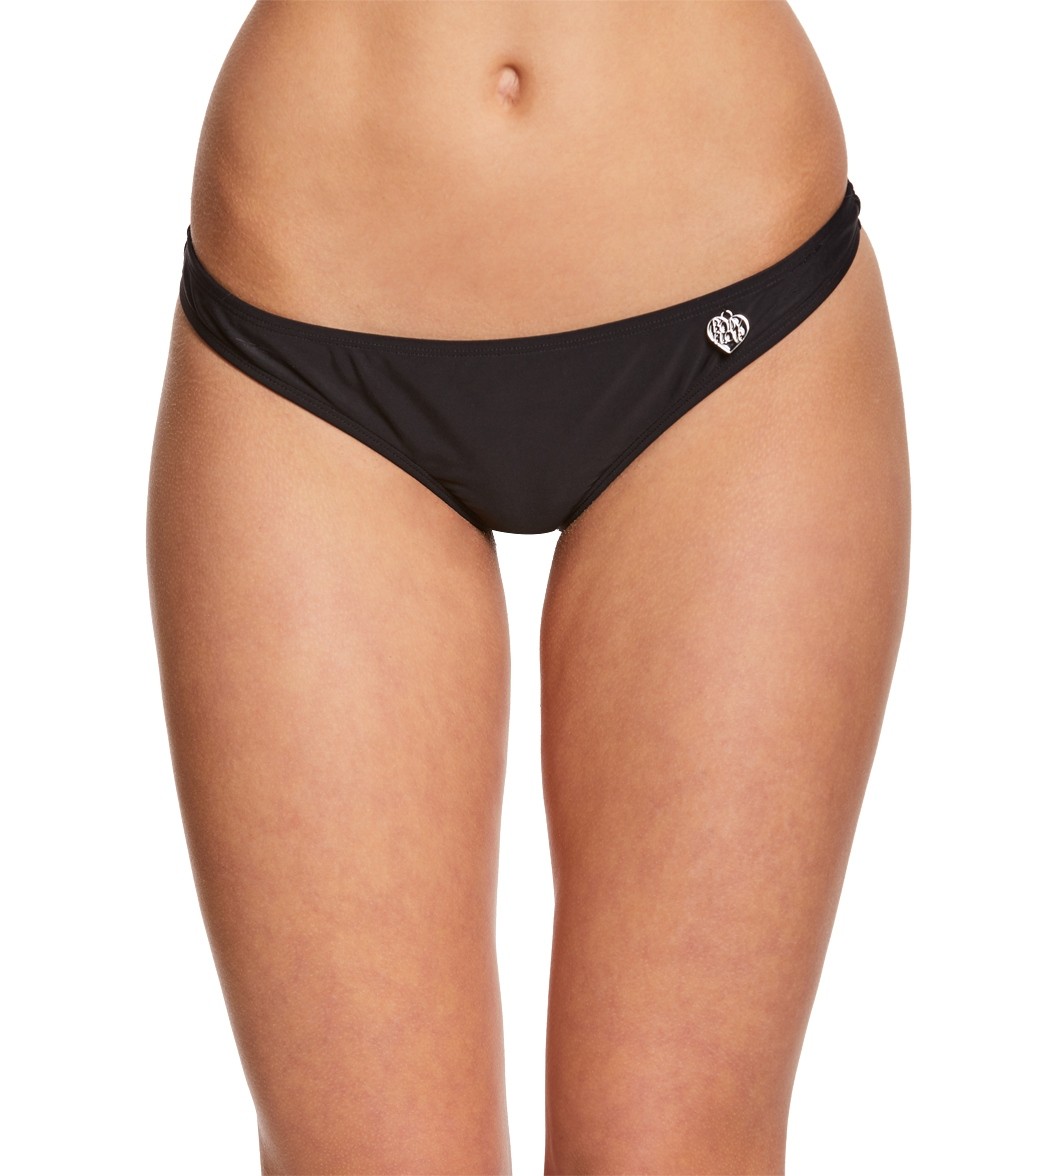 Body Glove Swimwear Smoothies Thong Bikini Bottom - Black X-Small Nylon/Spandex - Swimoutlet.com